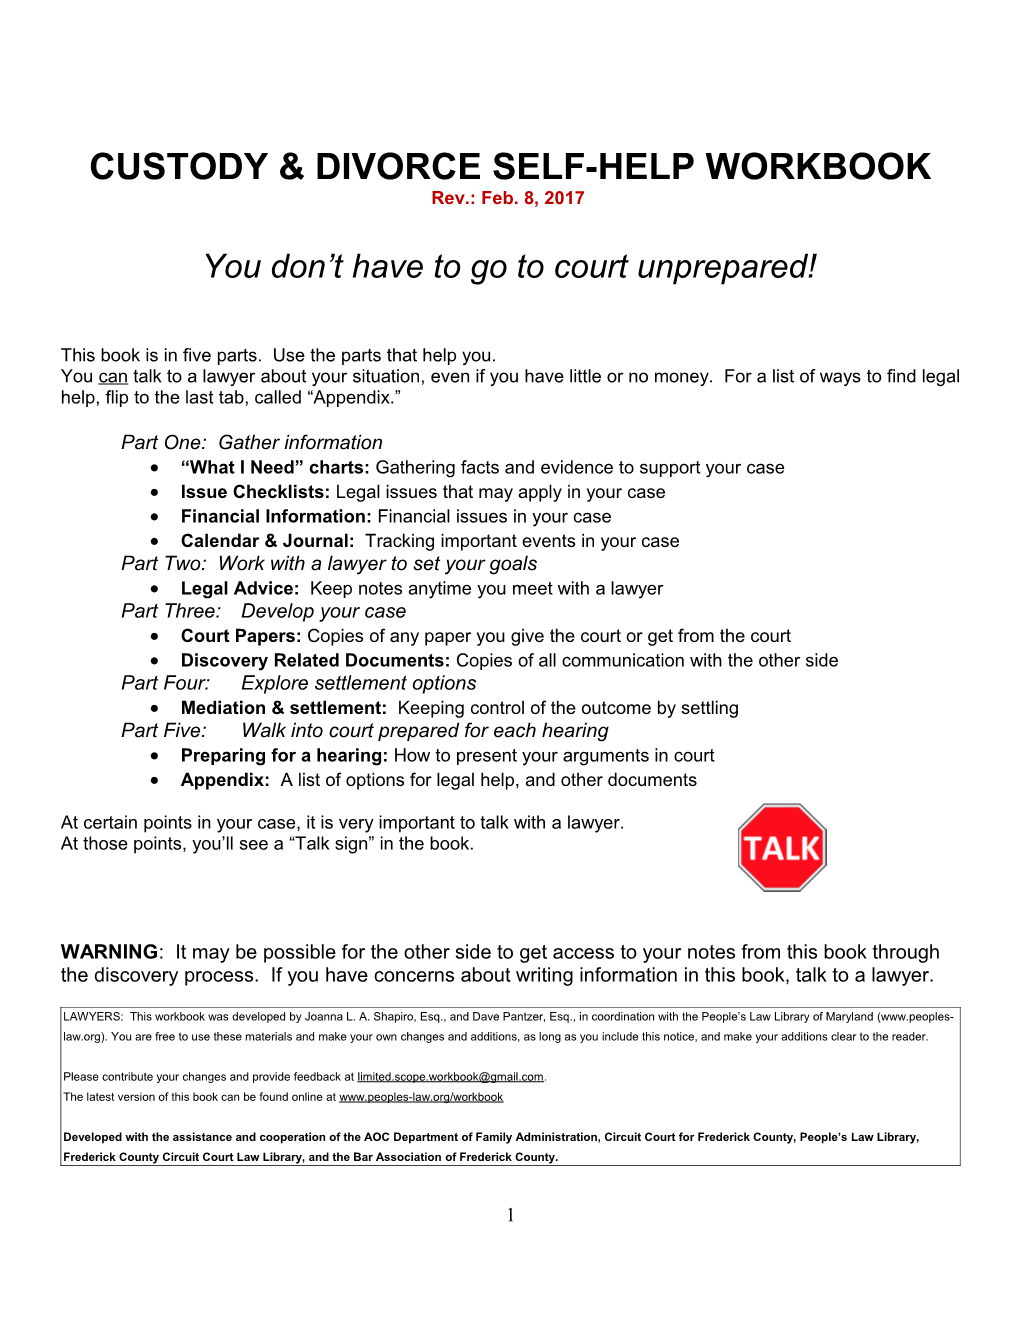 Custody & Divorce Self-Help Workbook